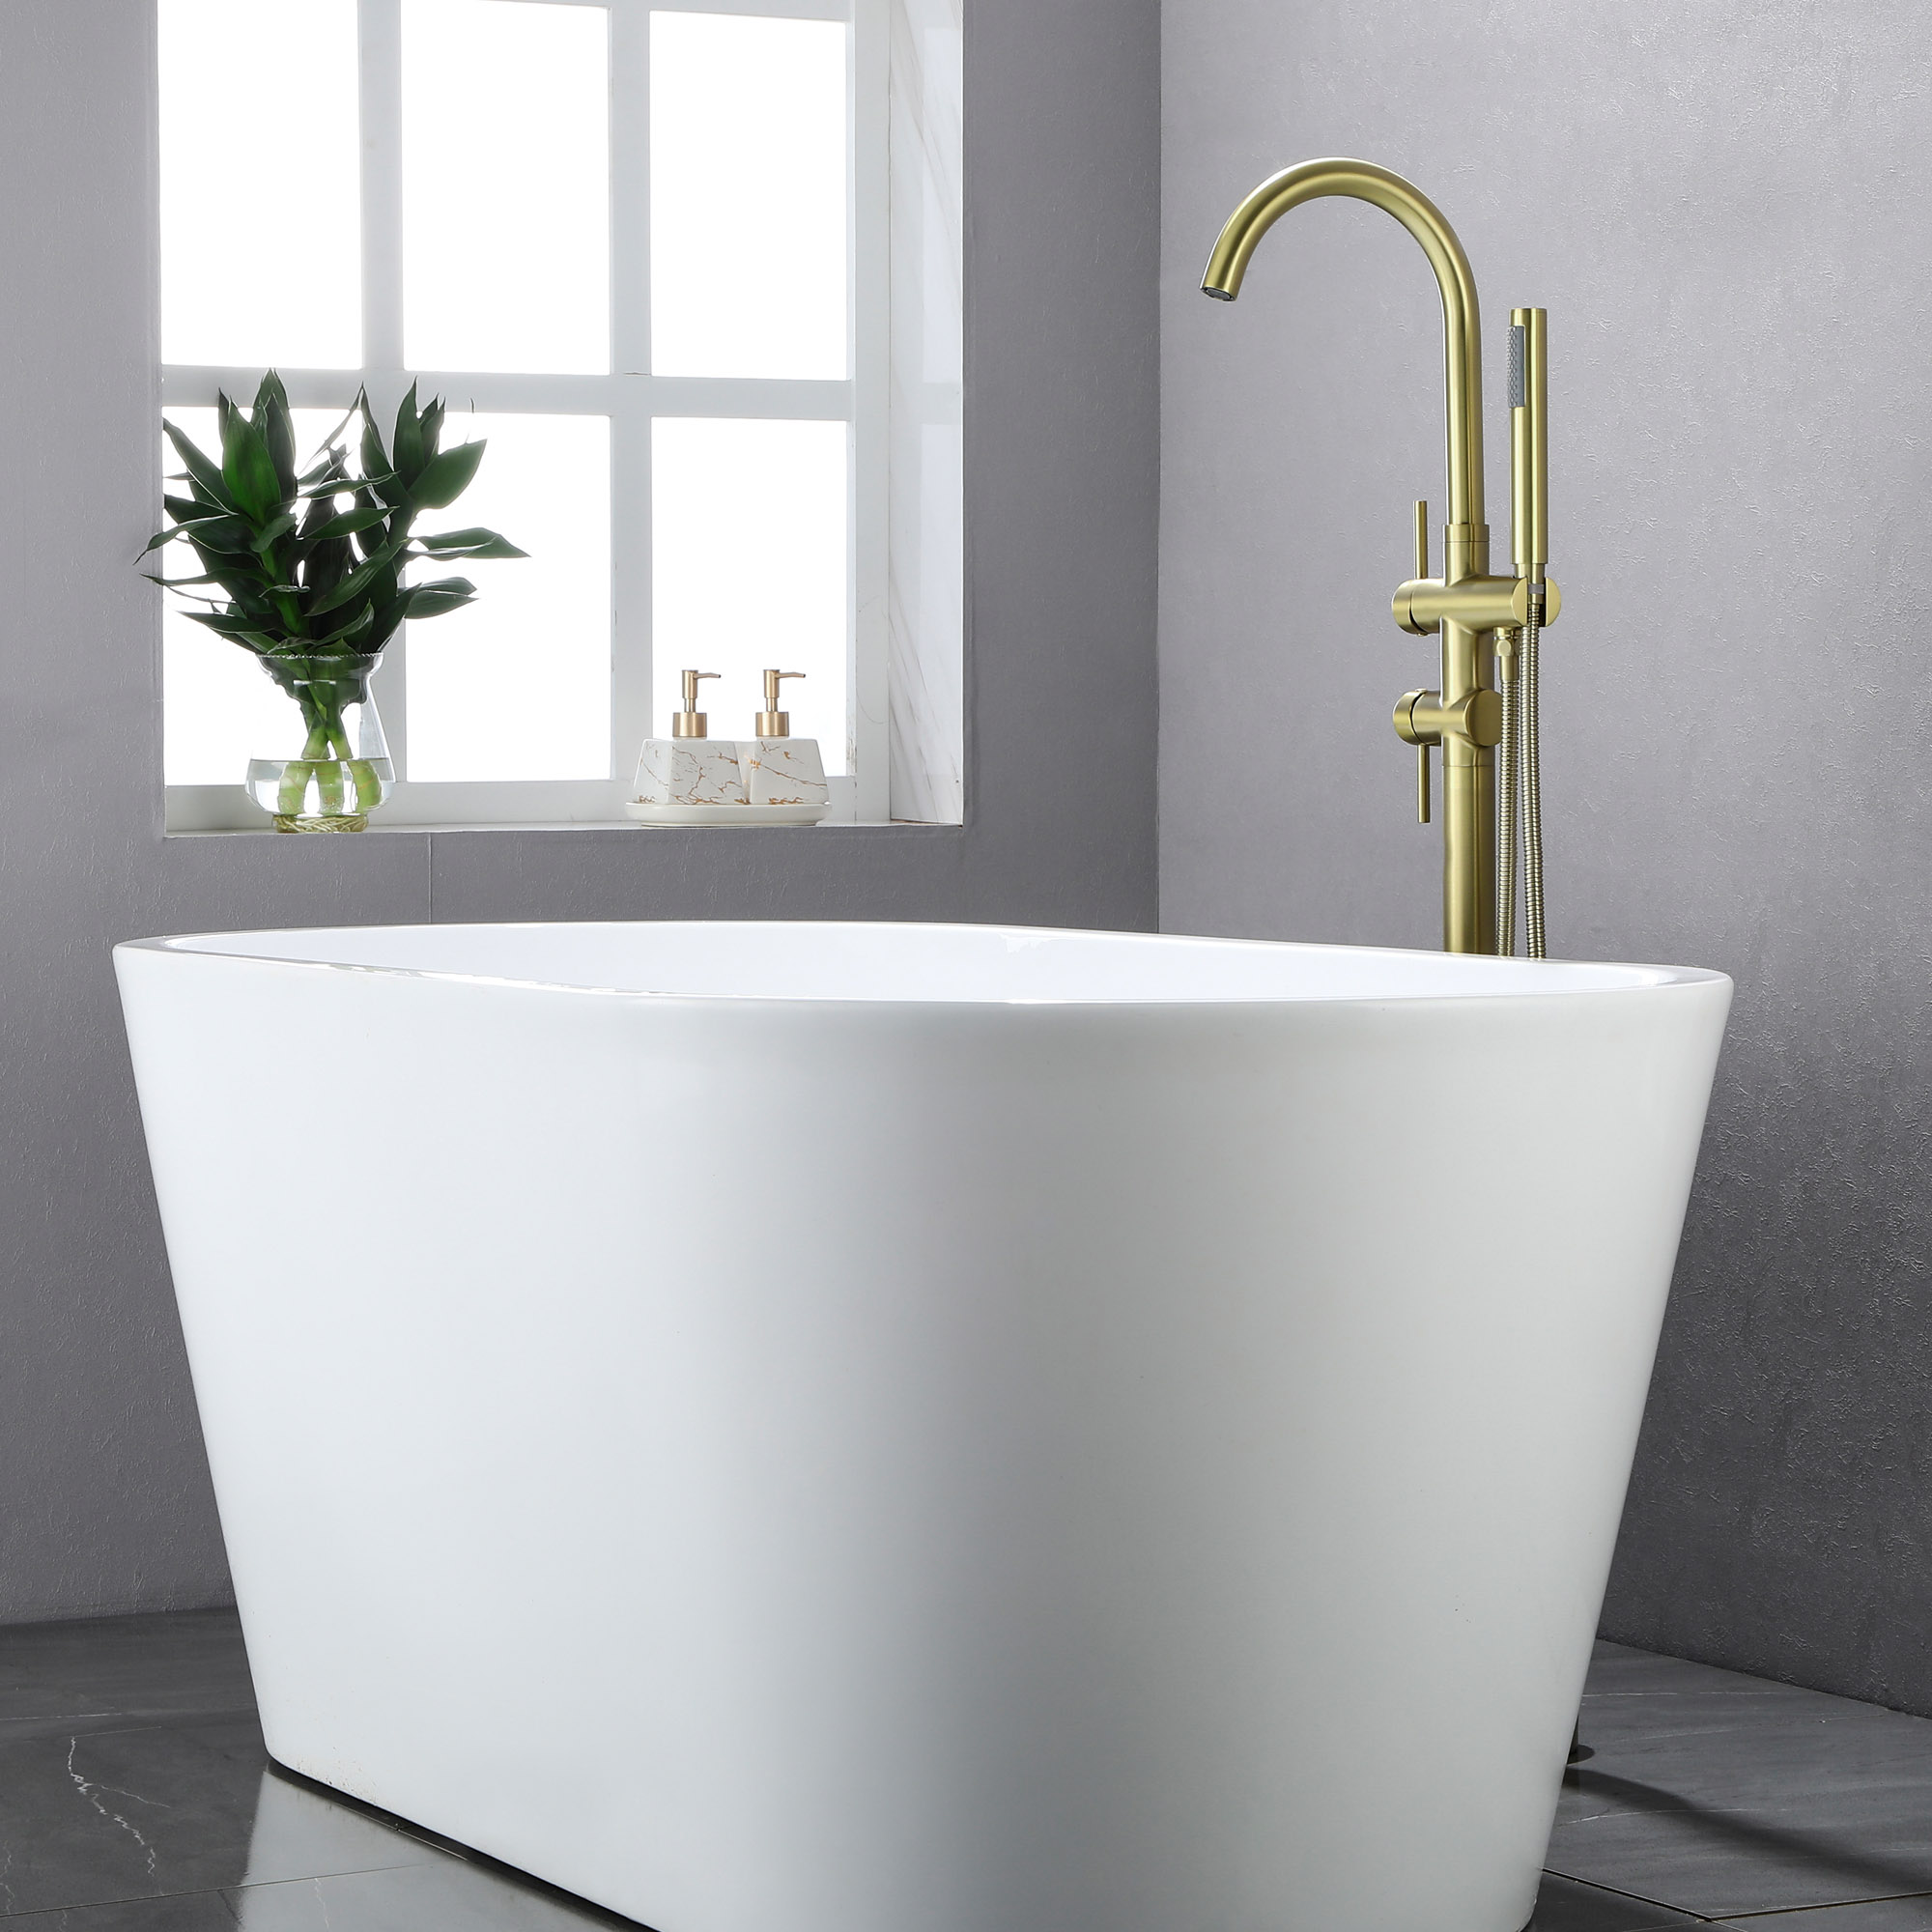 Casainc Freestanding 2-Handle Bathtub Faucet with Handheld Shower (Brushed Gold)-CASAINC